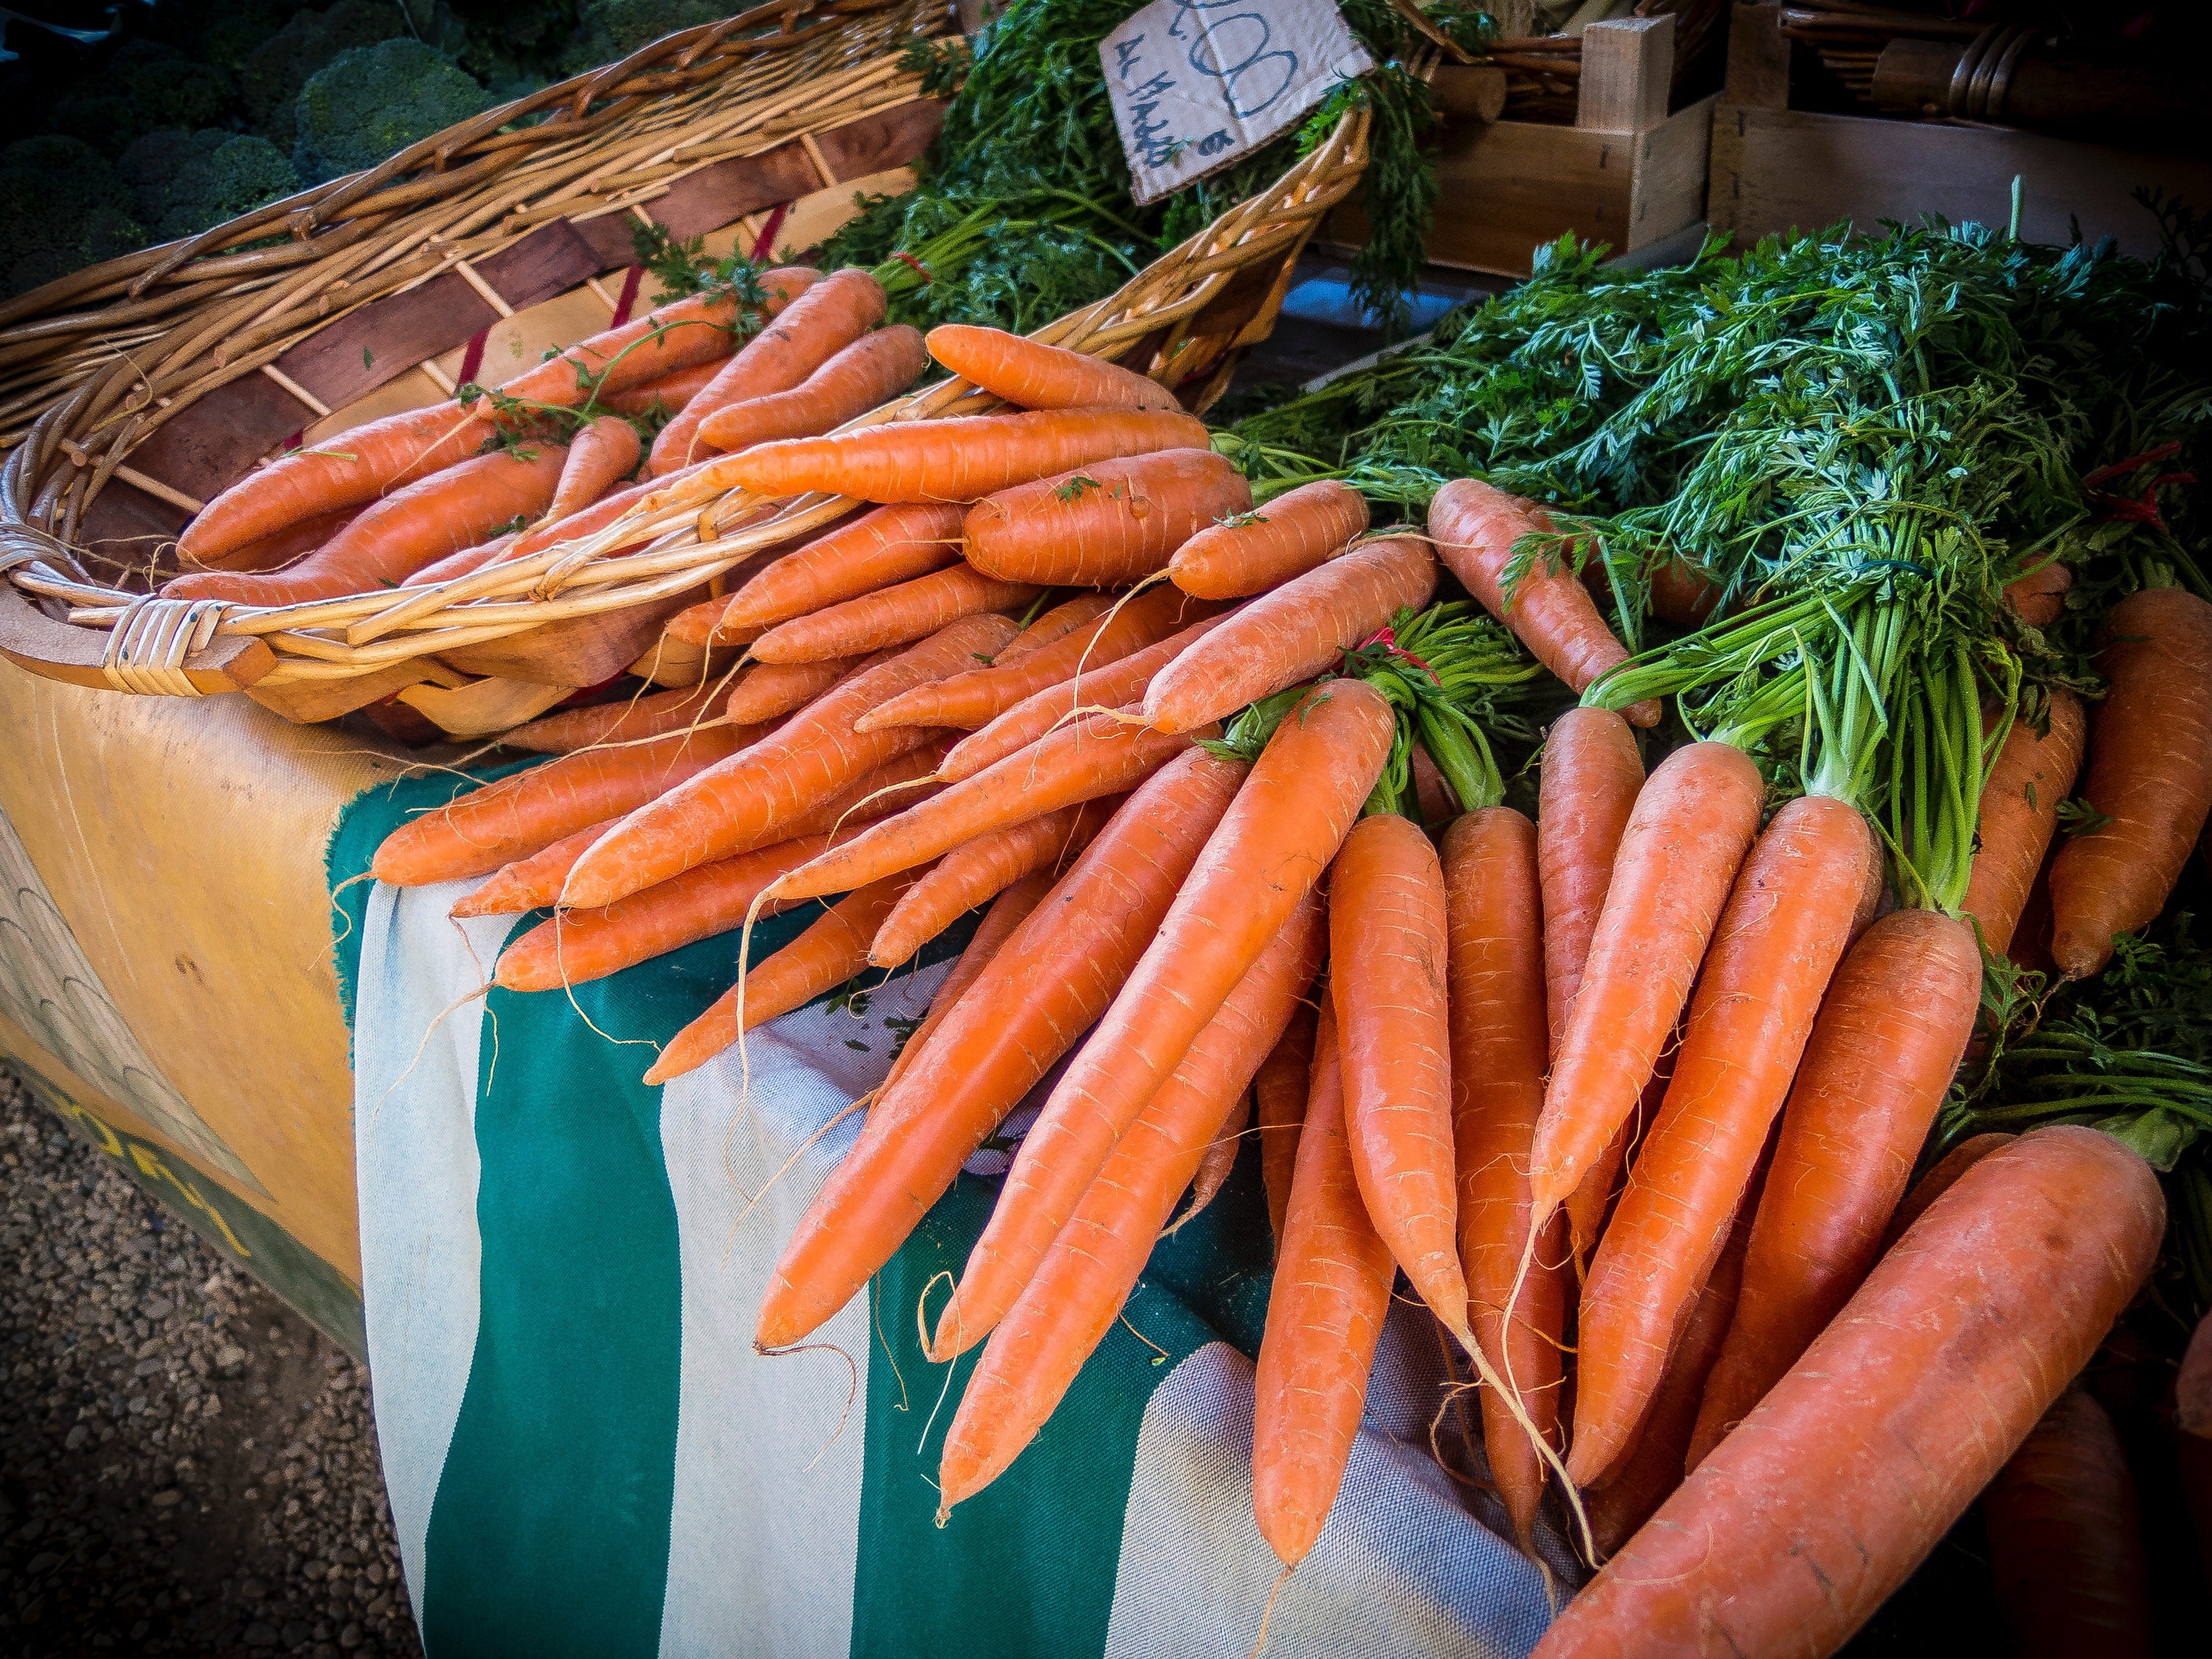 carrots provide a great source of beta carotene